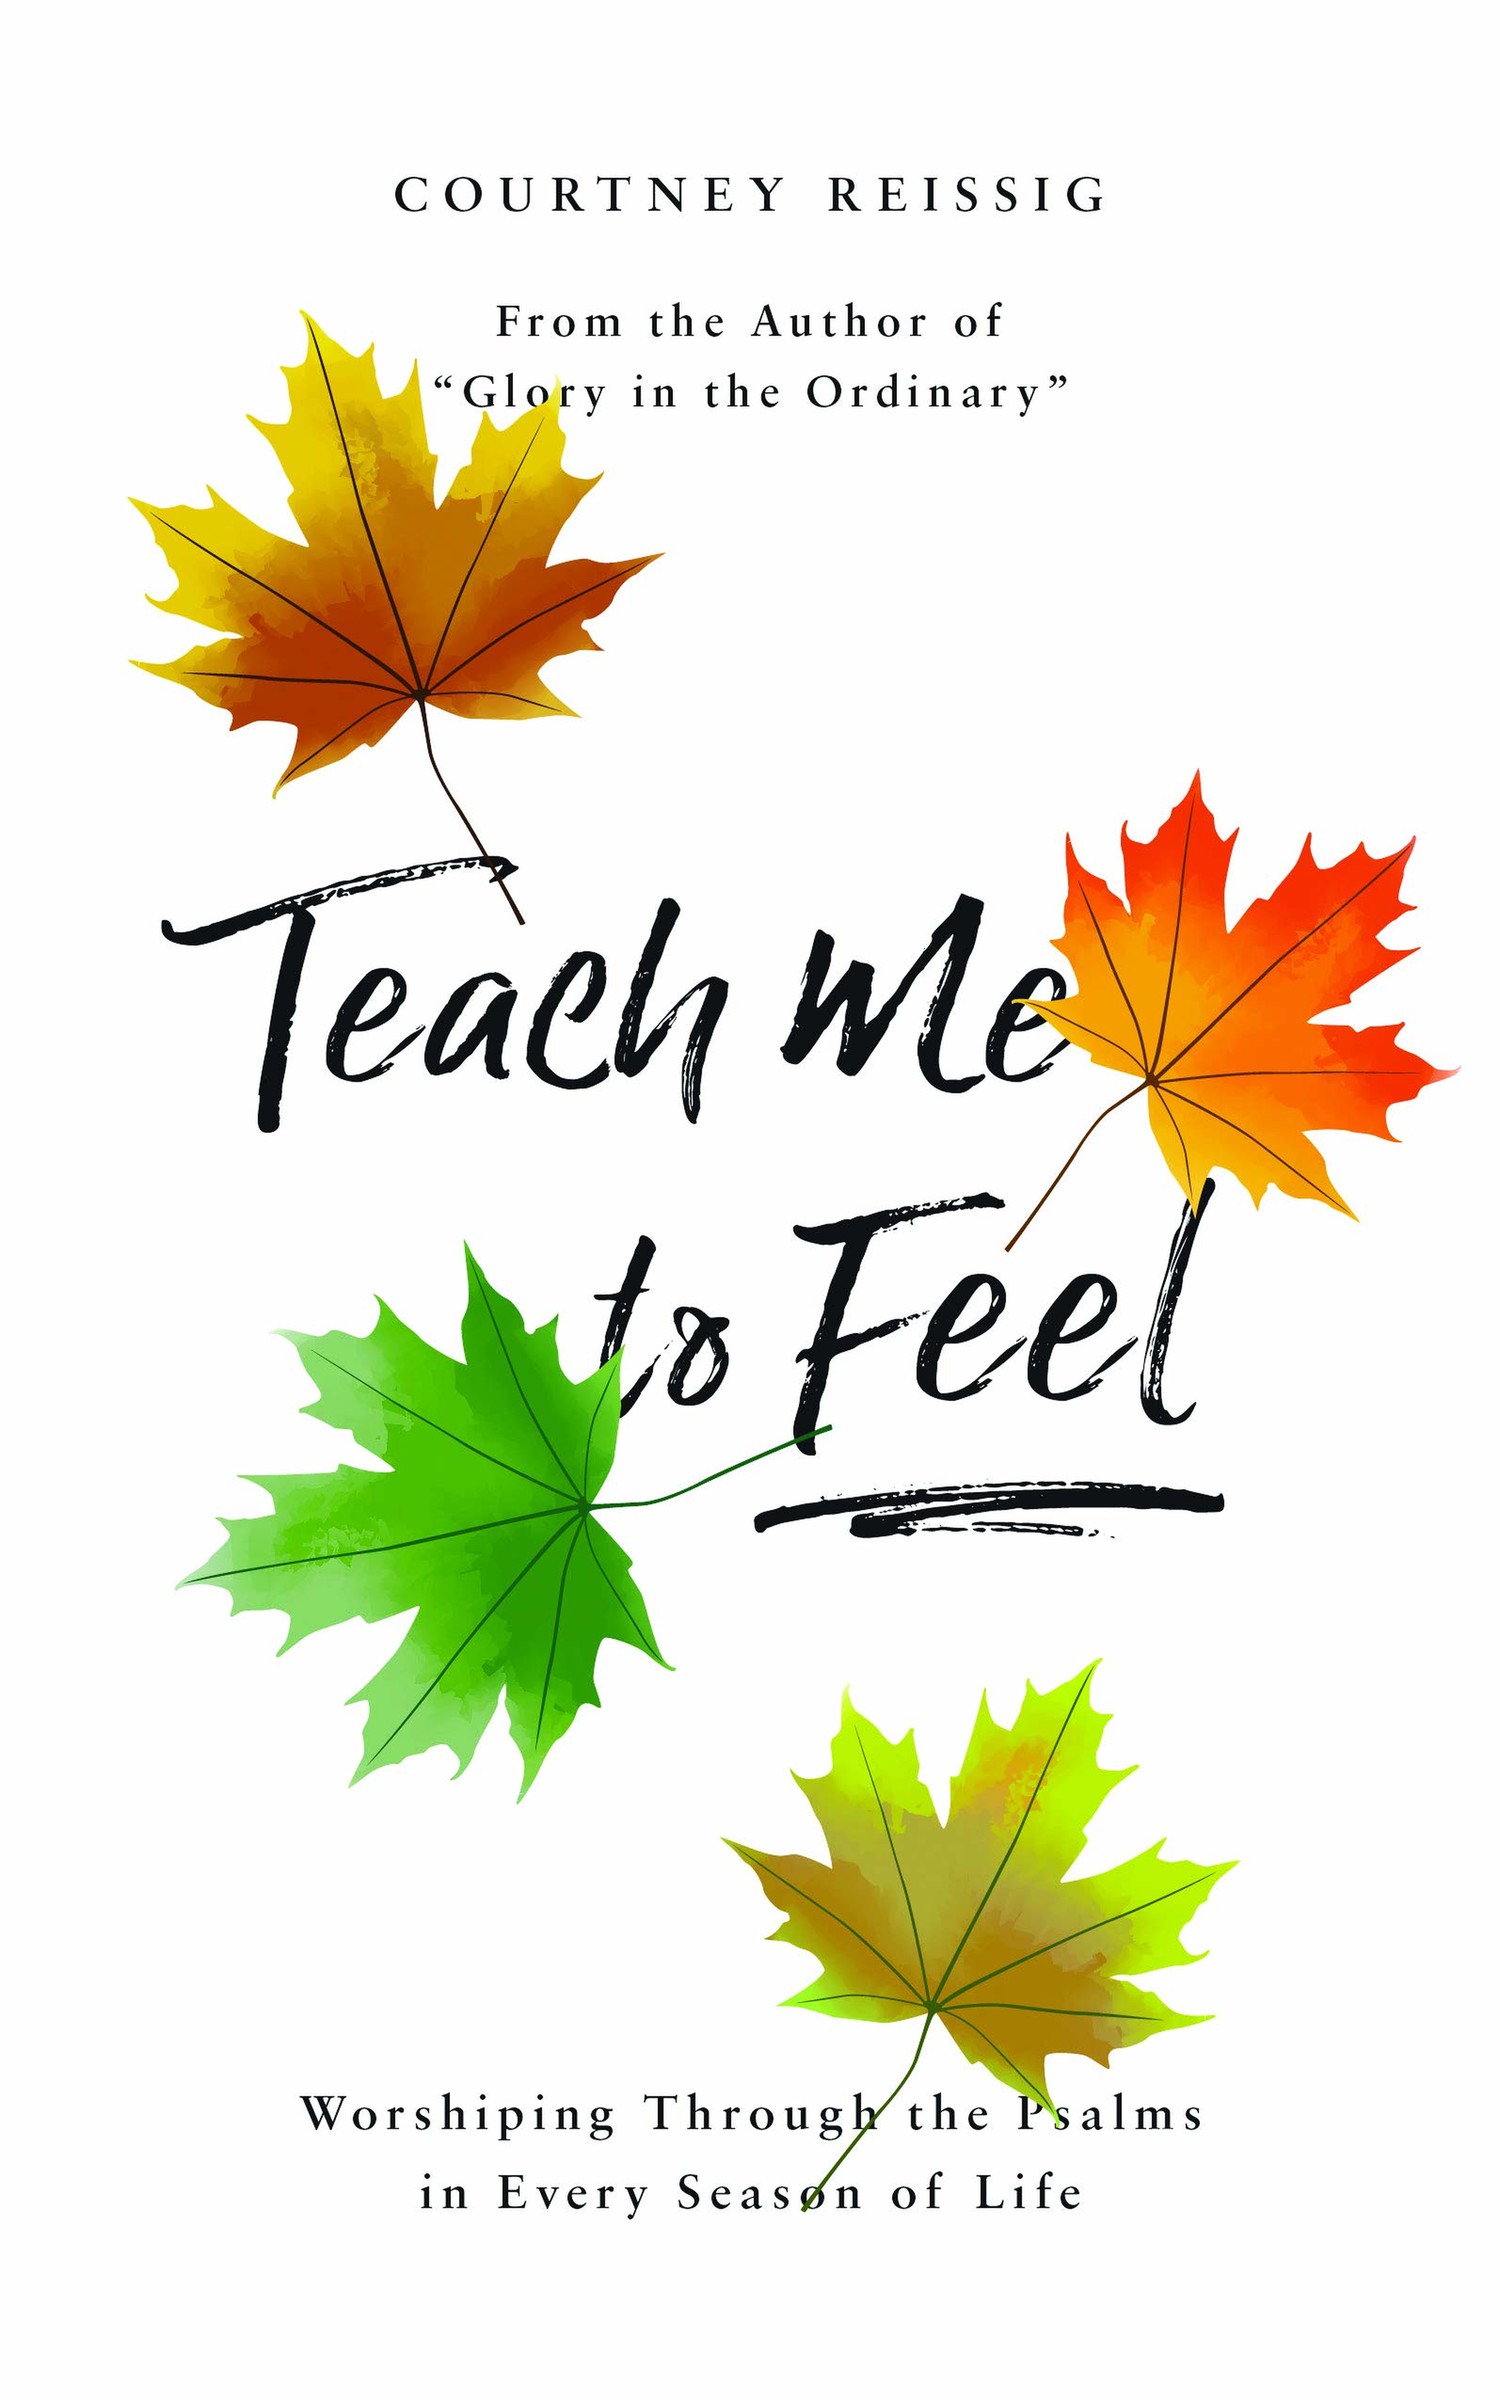 Teach-Me-To-Feel-Image.jpg